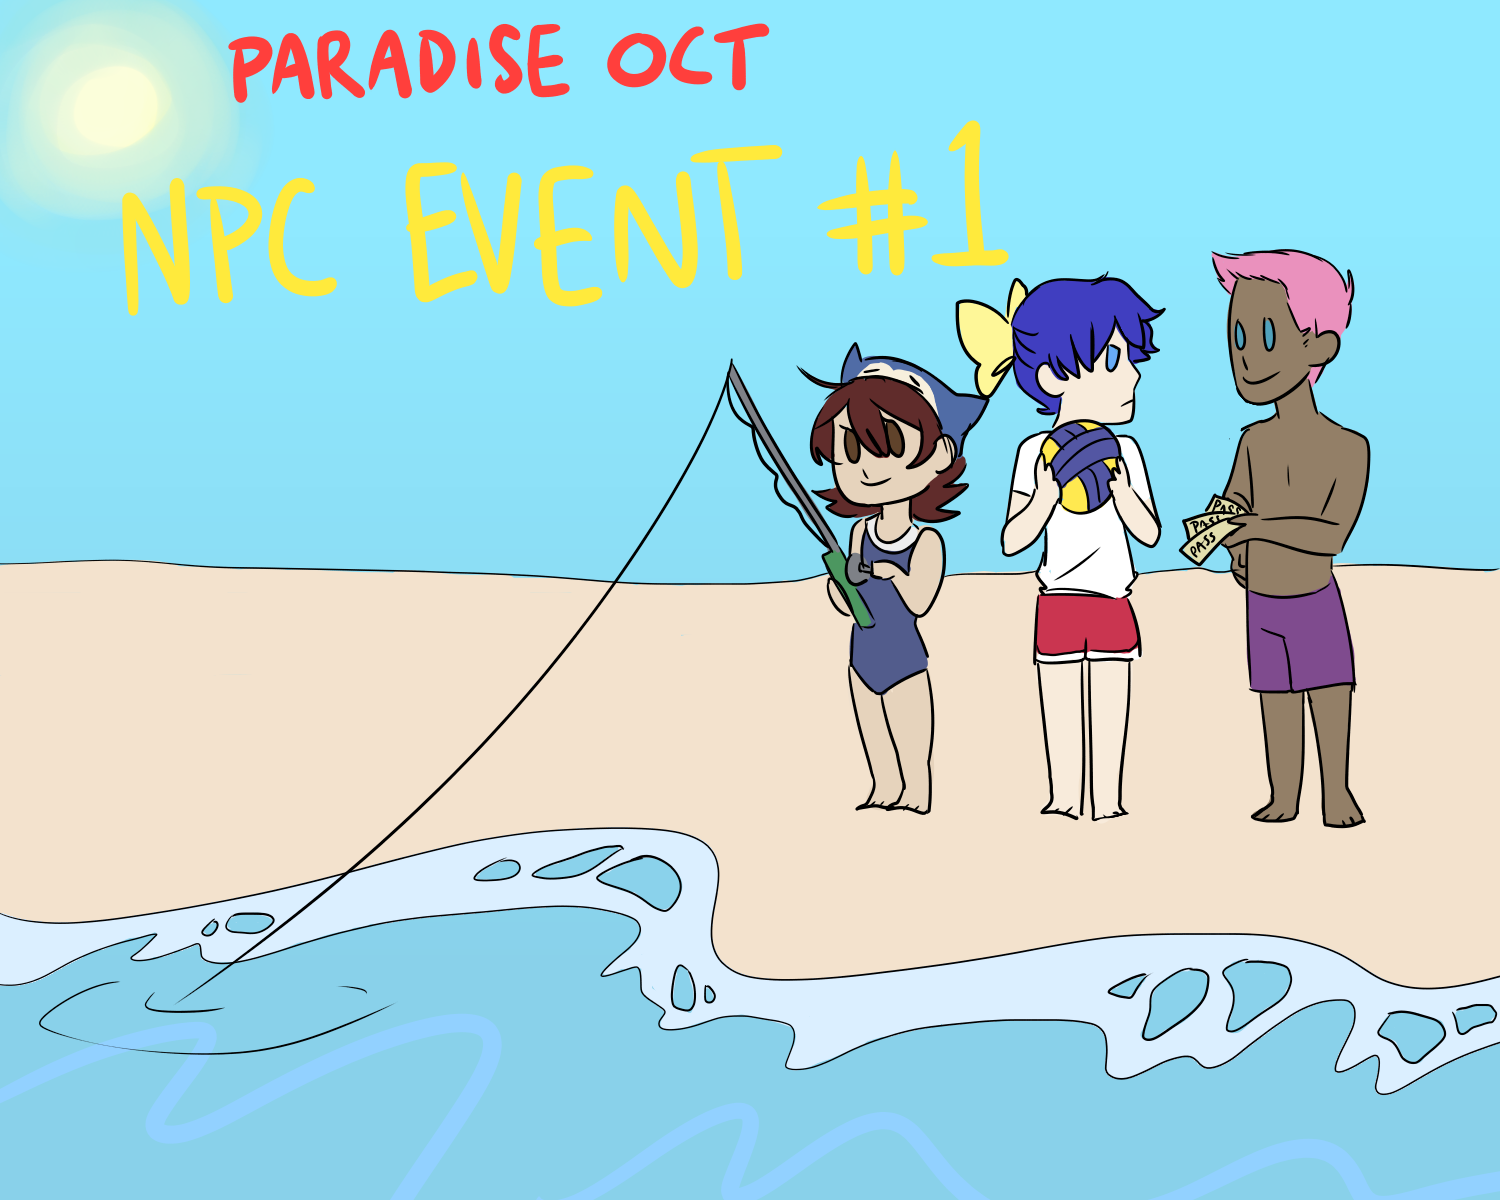 Paradise OCT: NPC Event #1